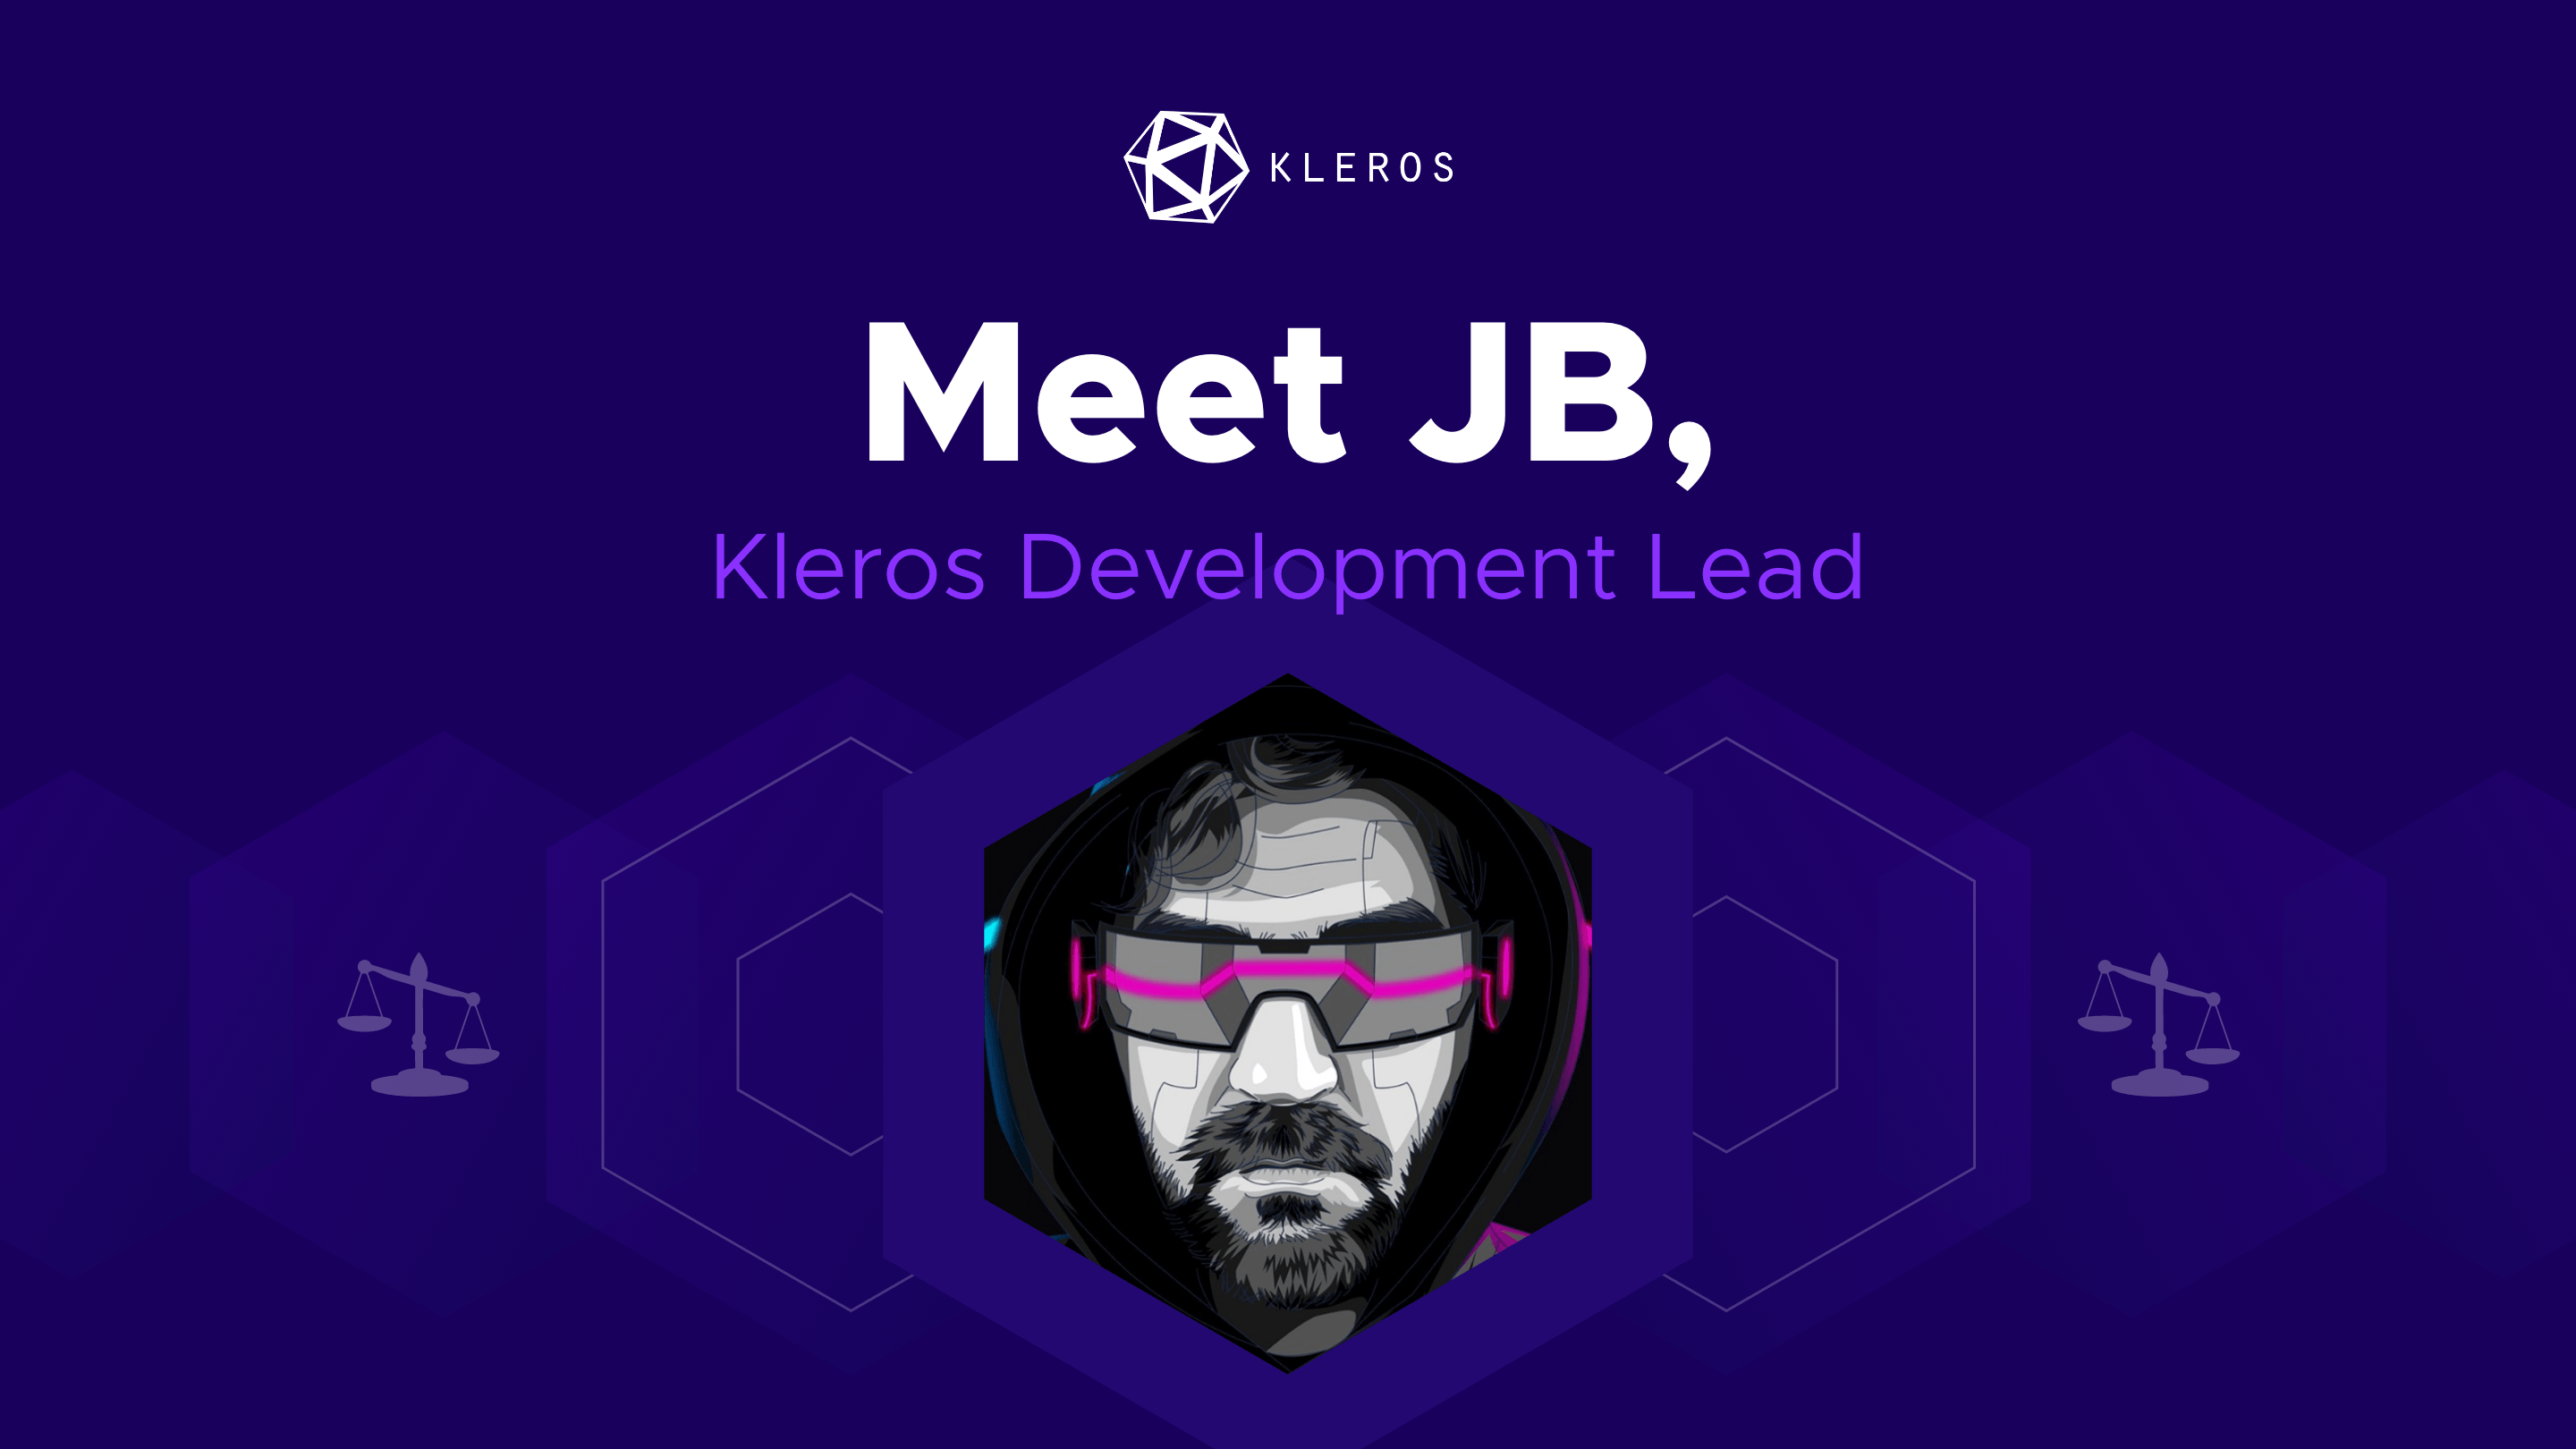 Meet JB, Kleros Development Lead